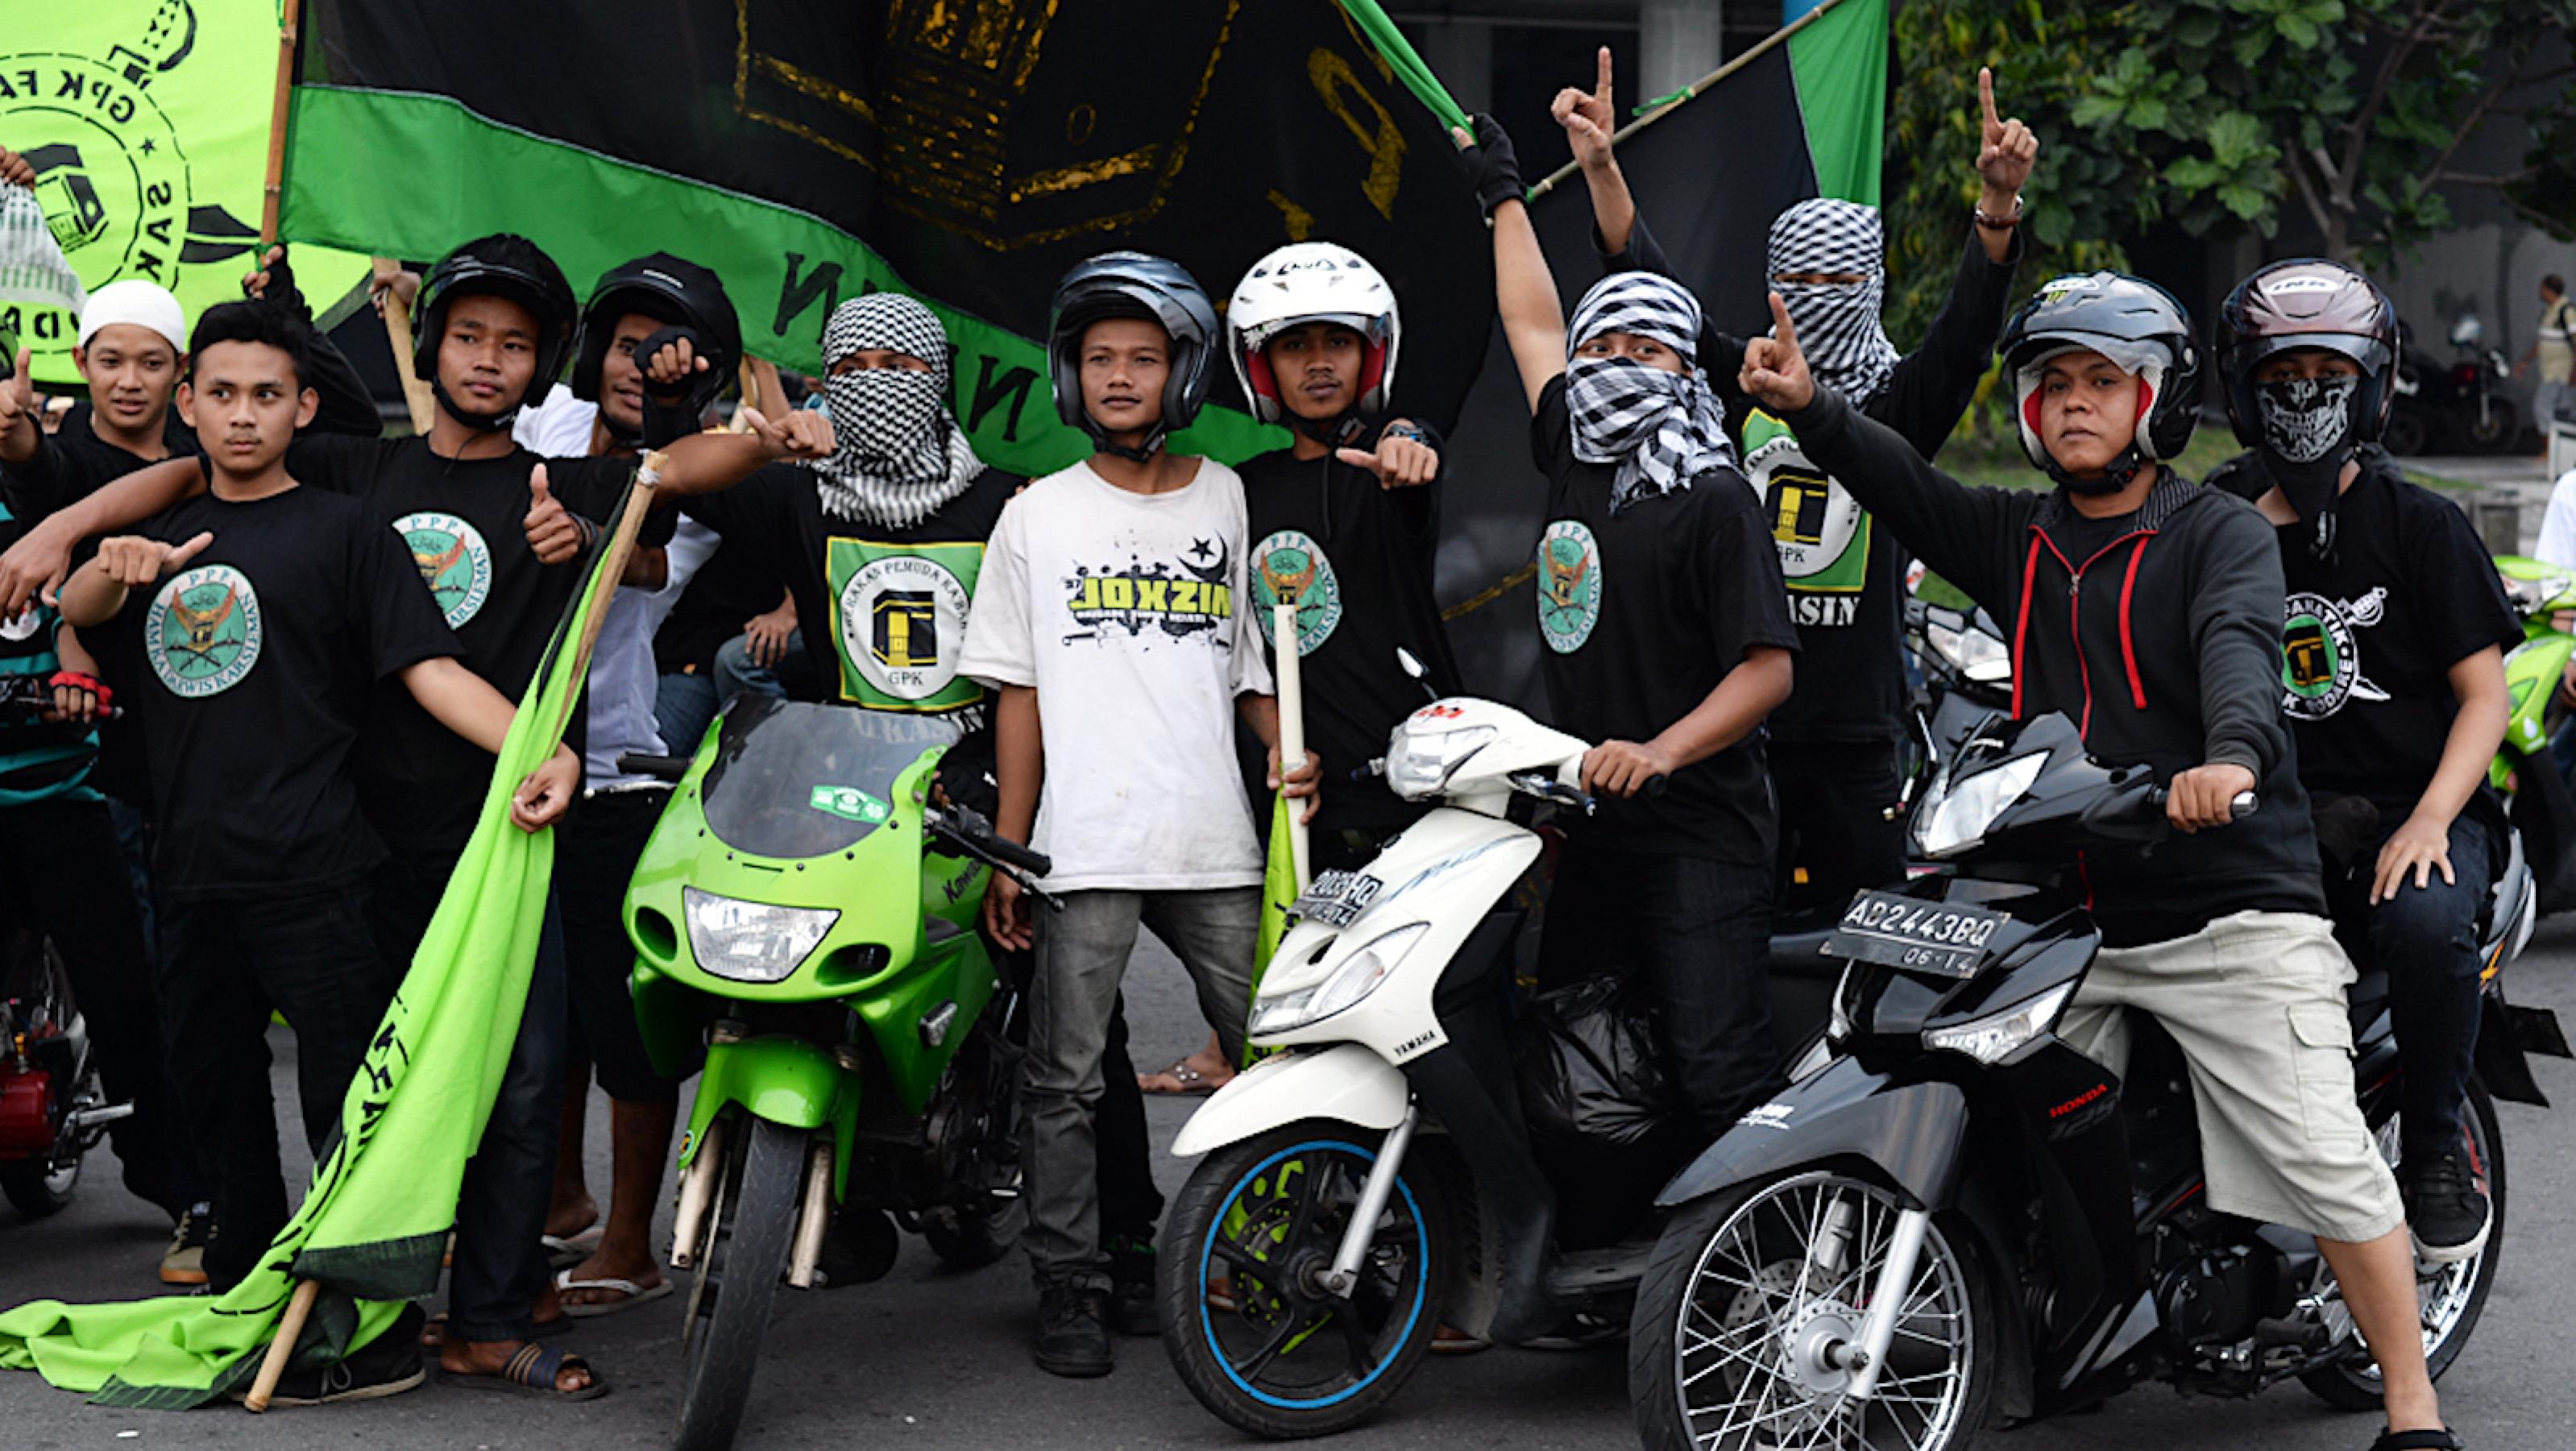 Junge Indonesier demonstrieren auf Mopeds mit Fahnen der Ka'abah-Jugendbewegung (GPK)